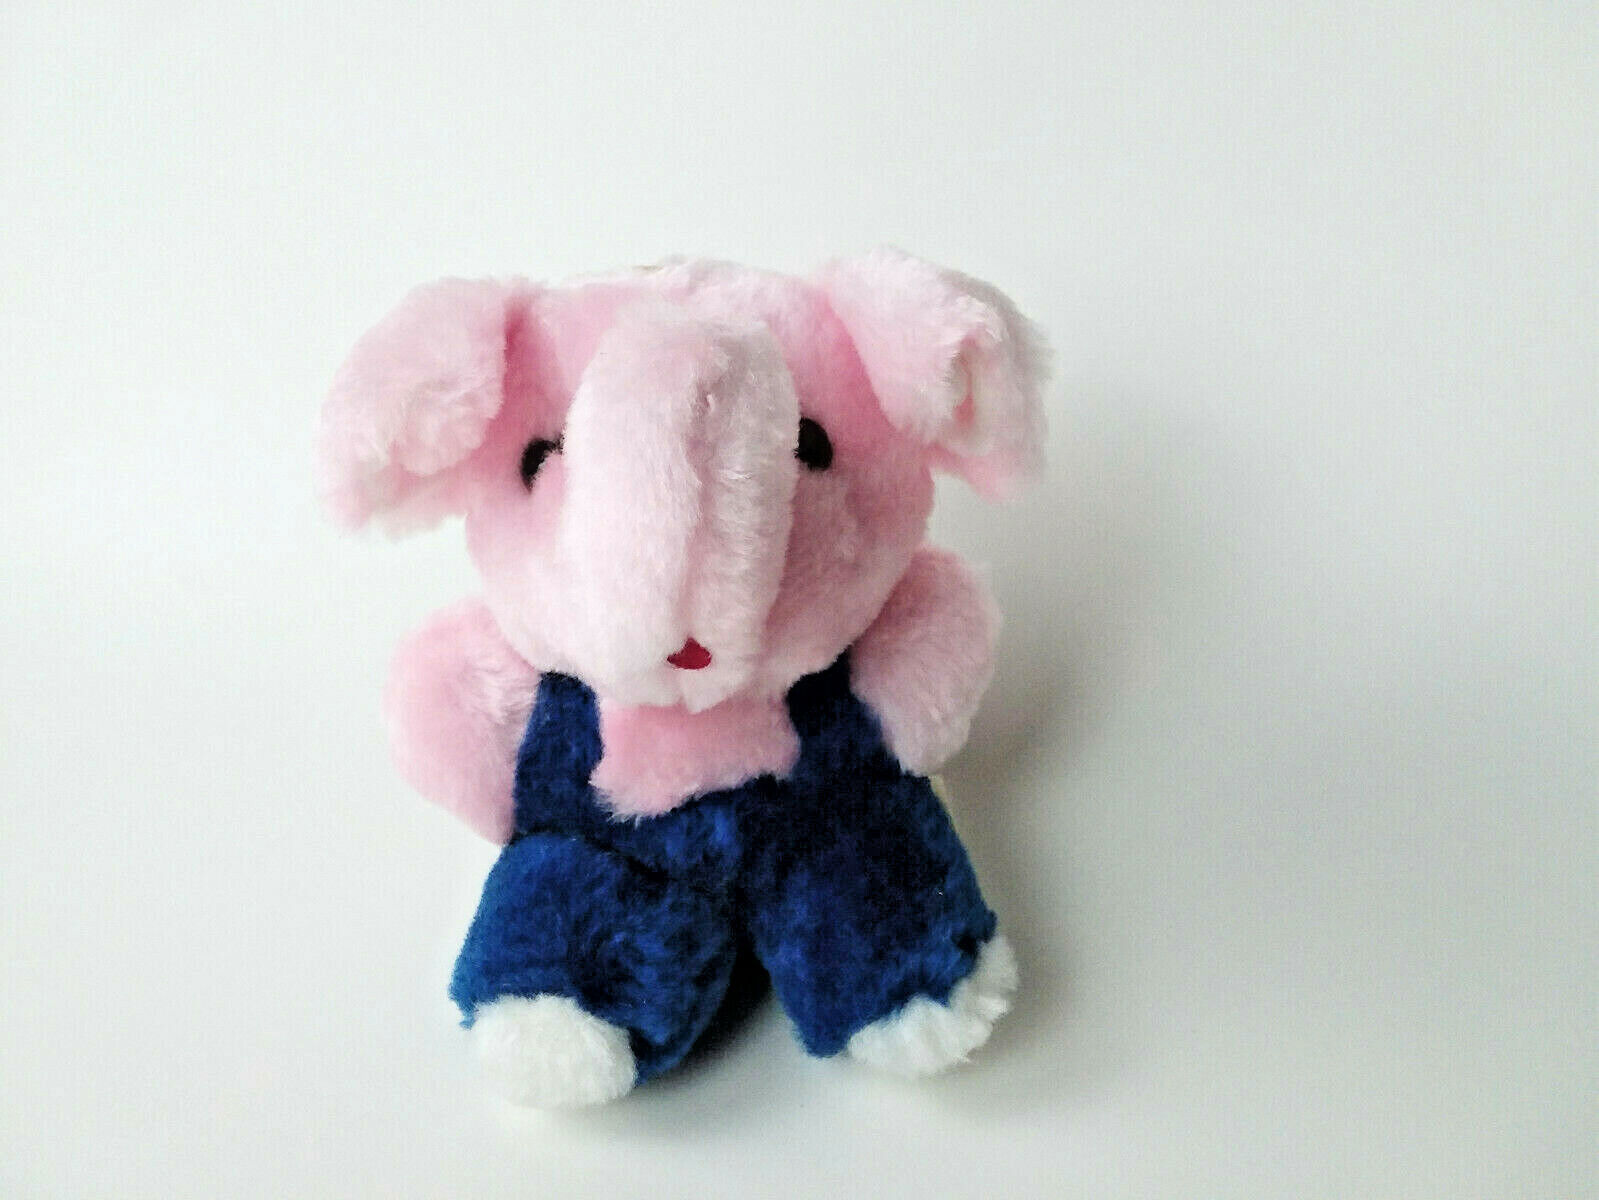 ACME Plush Pink Elephant Overalls Vintage 1985 Stuffed Animal - $6.74